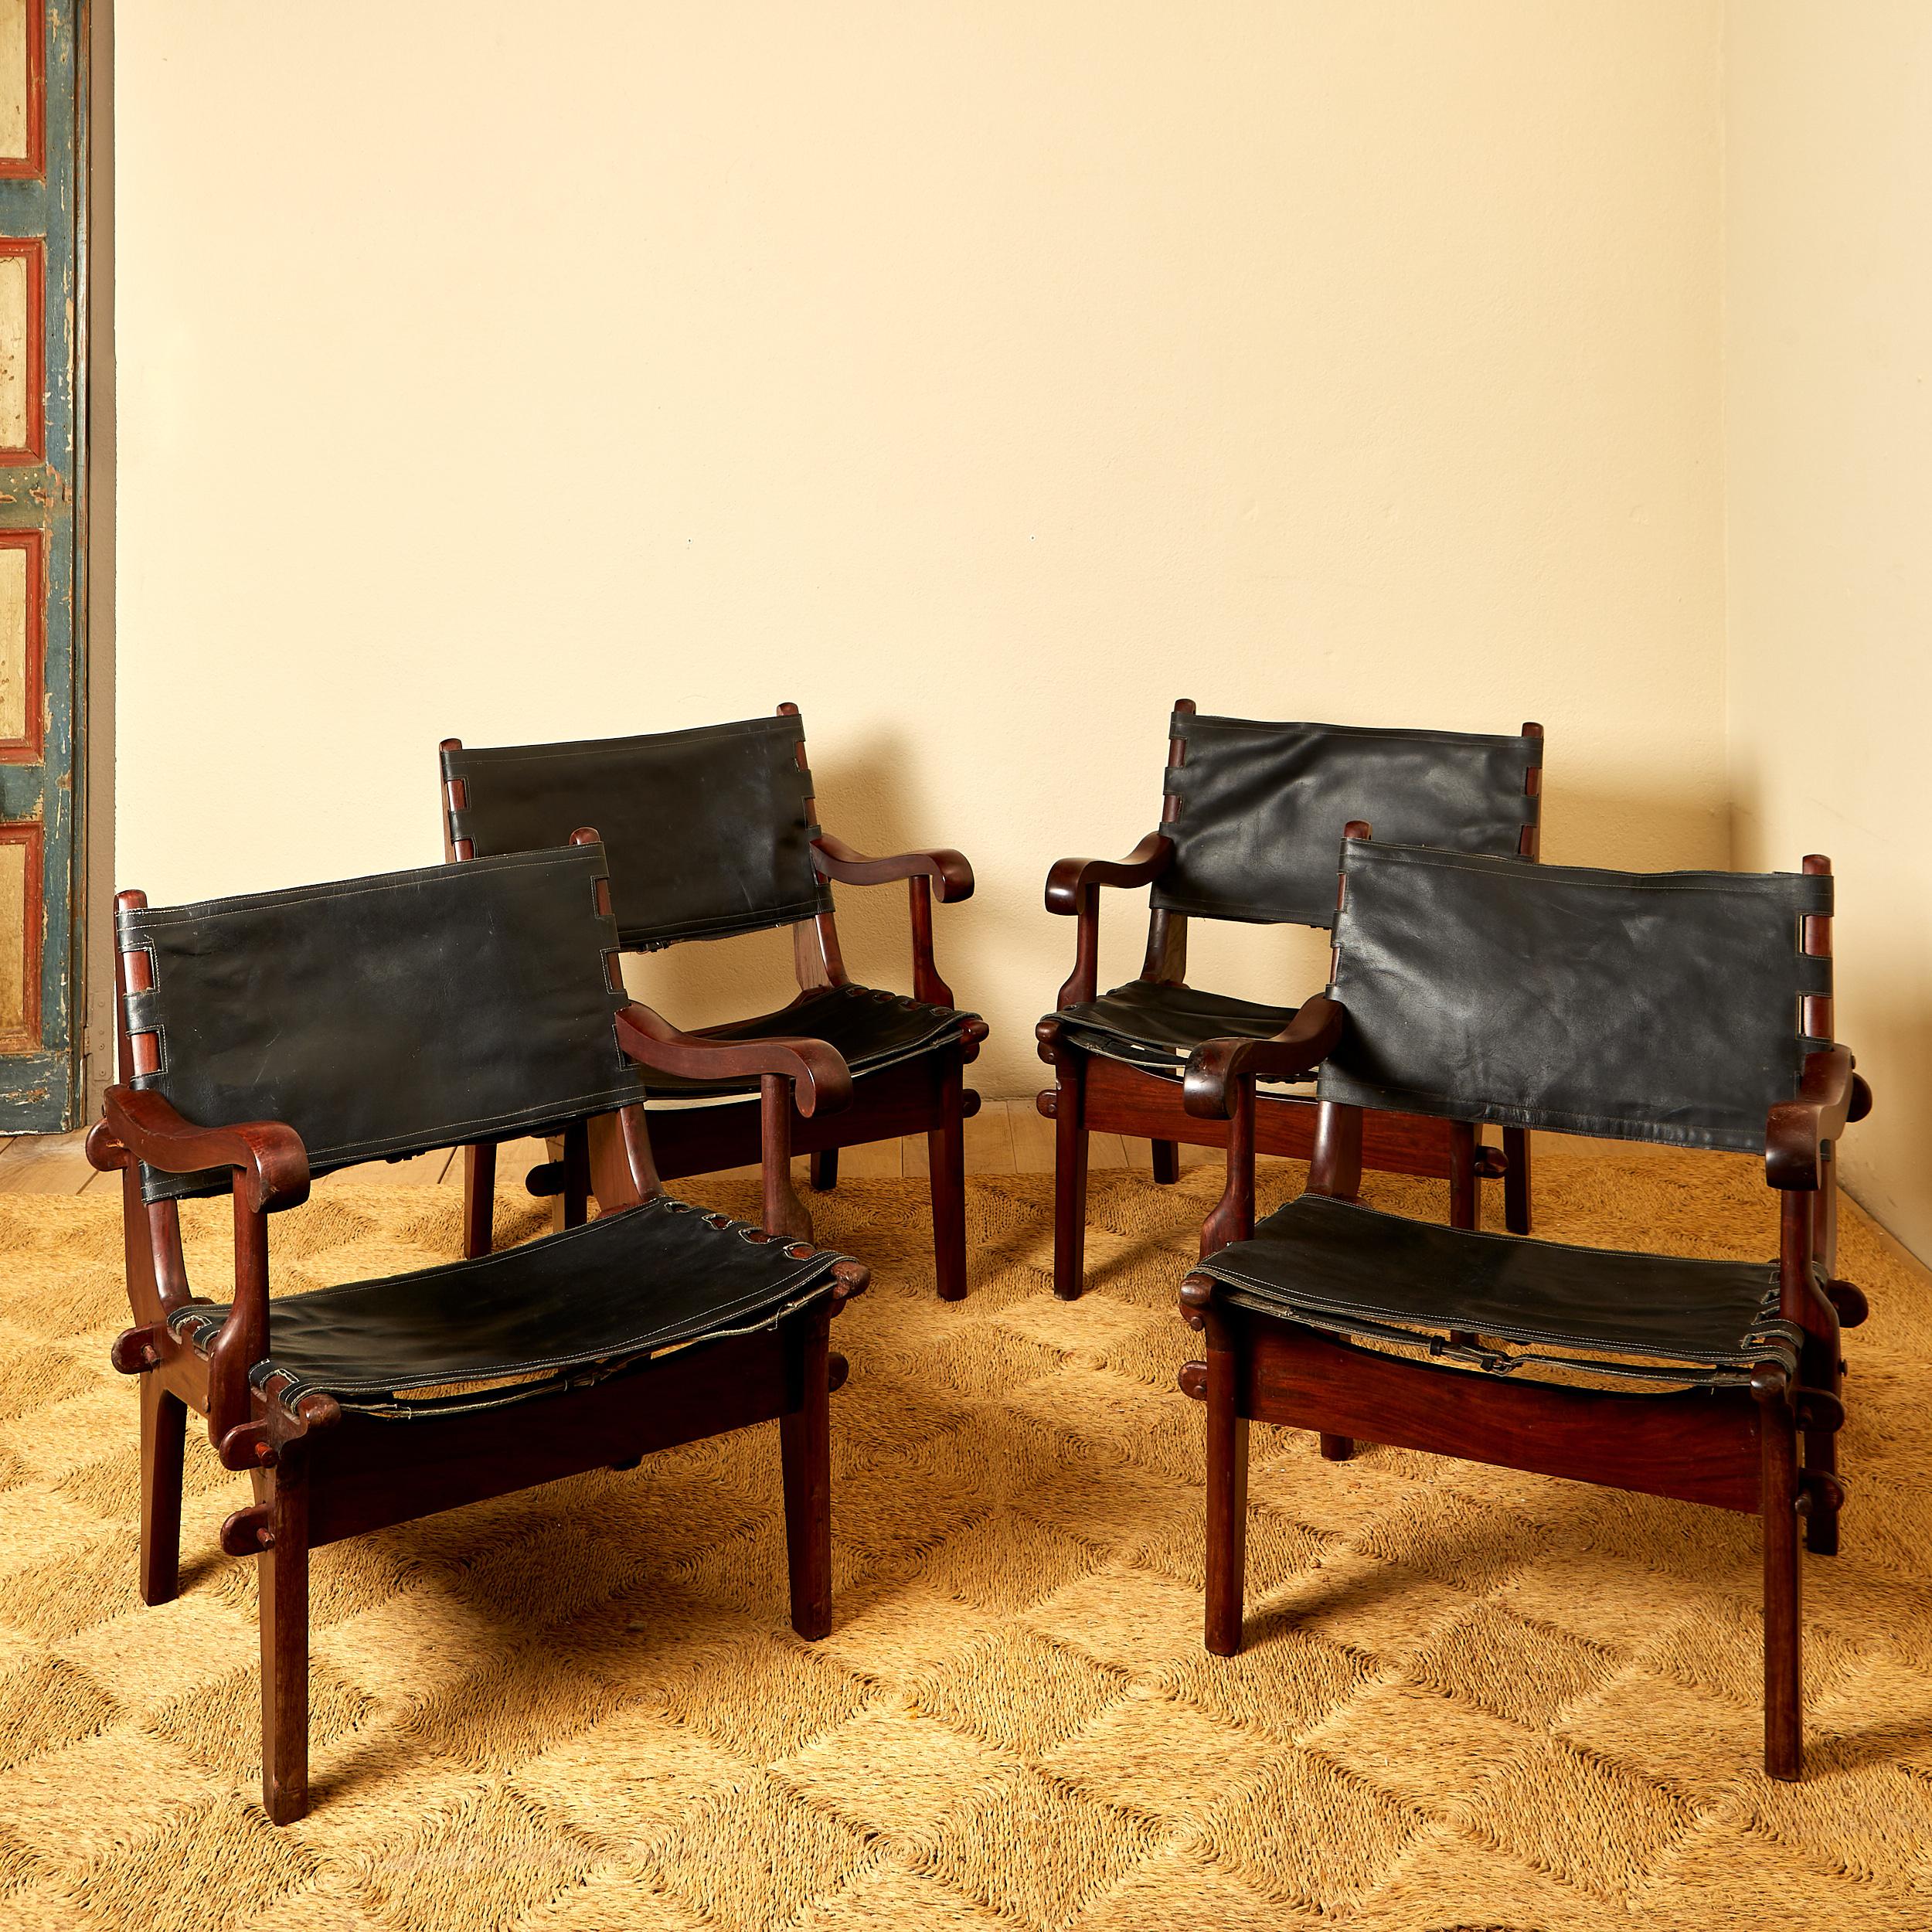 Angel Pazmino,
Suite of four Ecuadorian armchairs,
leather and wood,
circa 1960, Ecuador.
Height 77 cm, seat height 42 cm, width 62 cm, depth 52 cm.